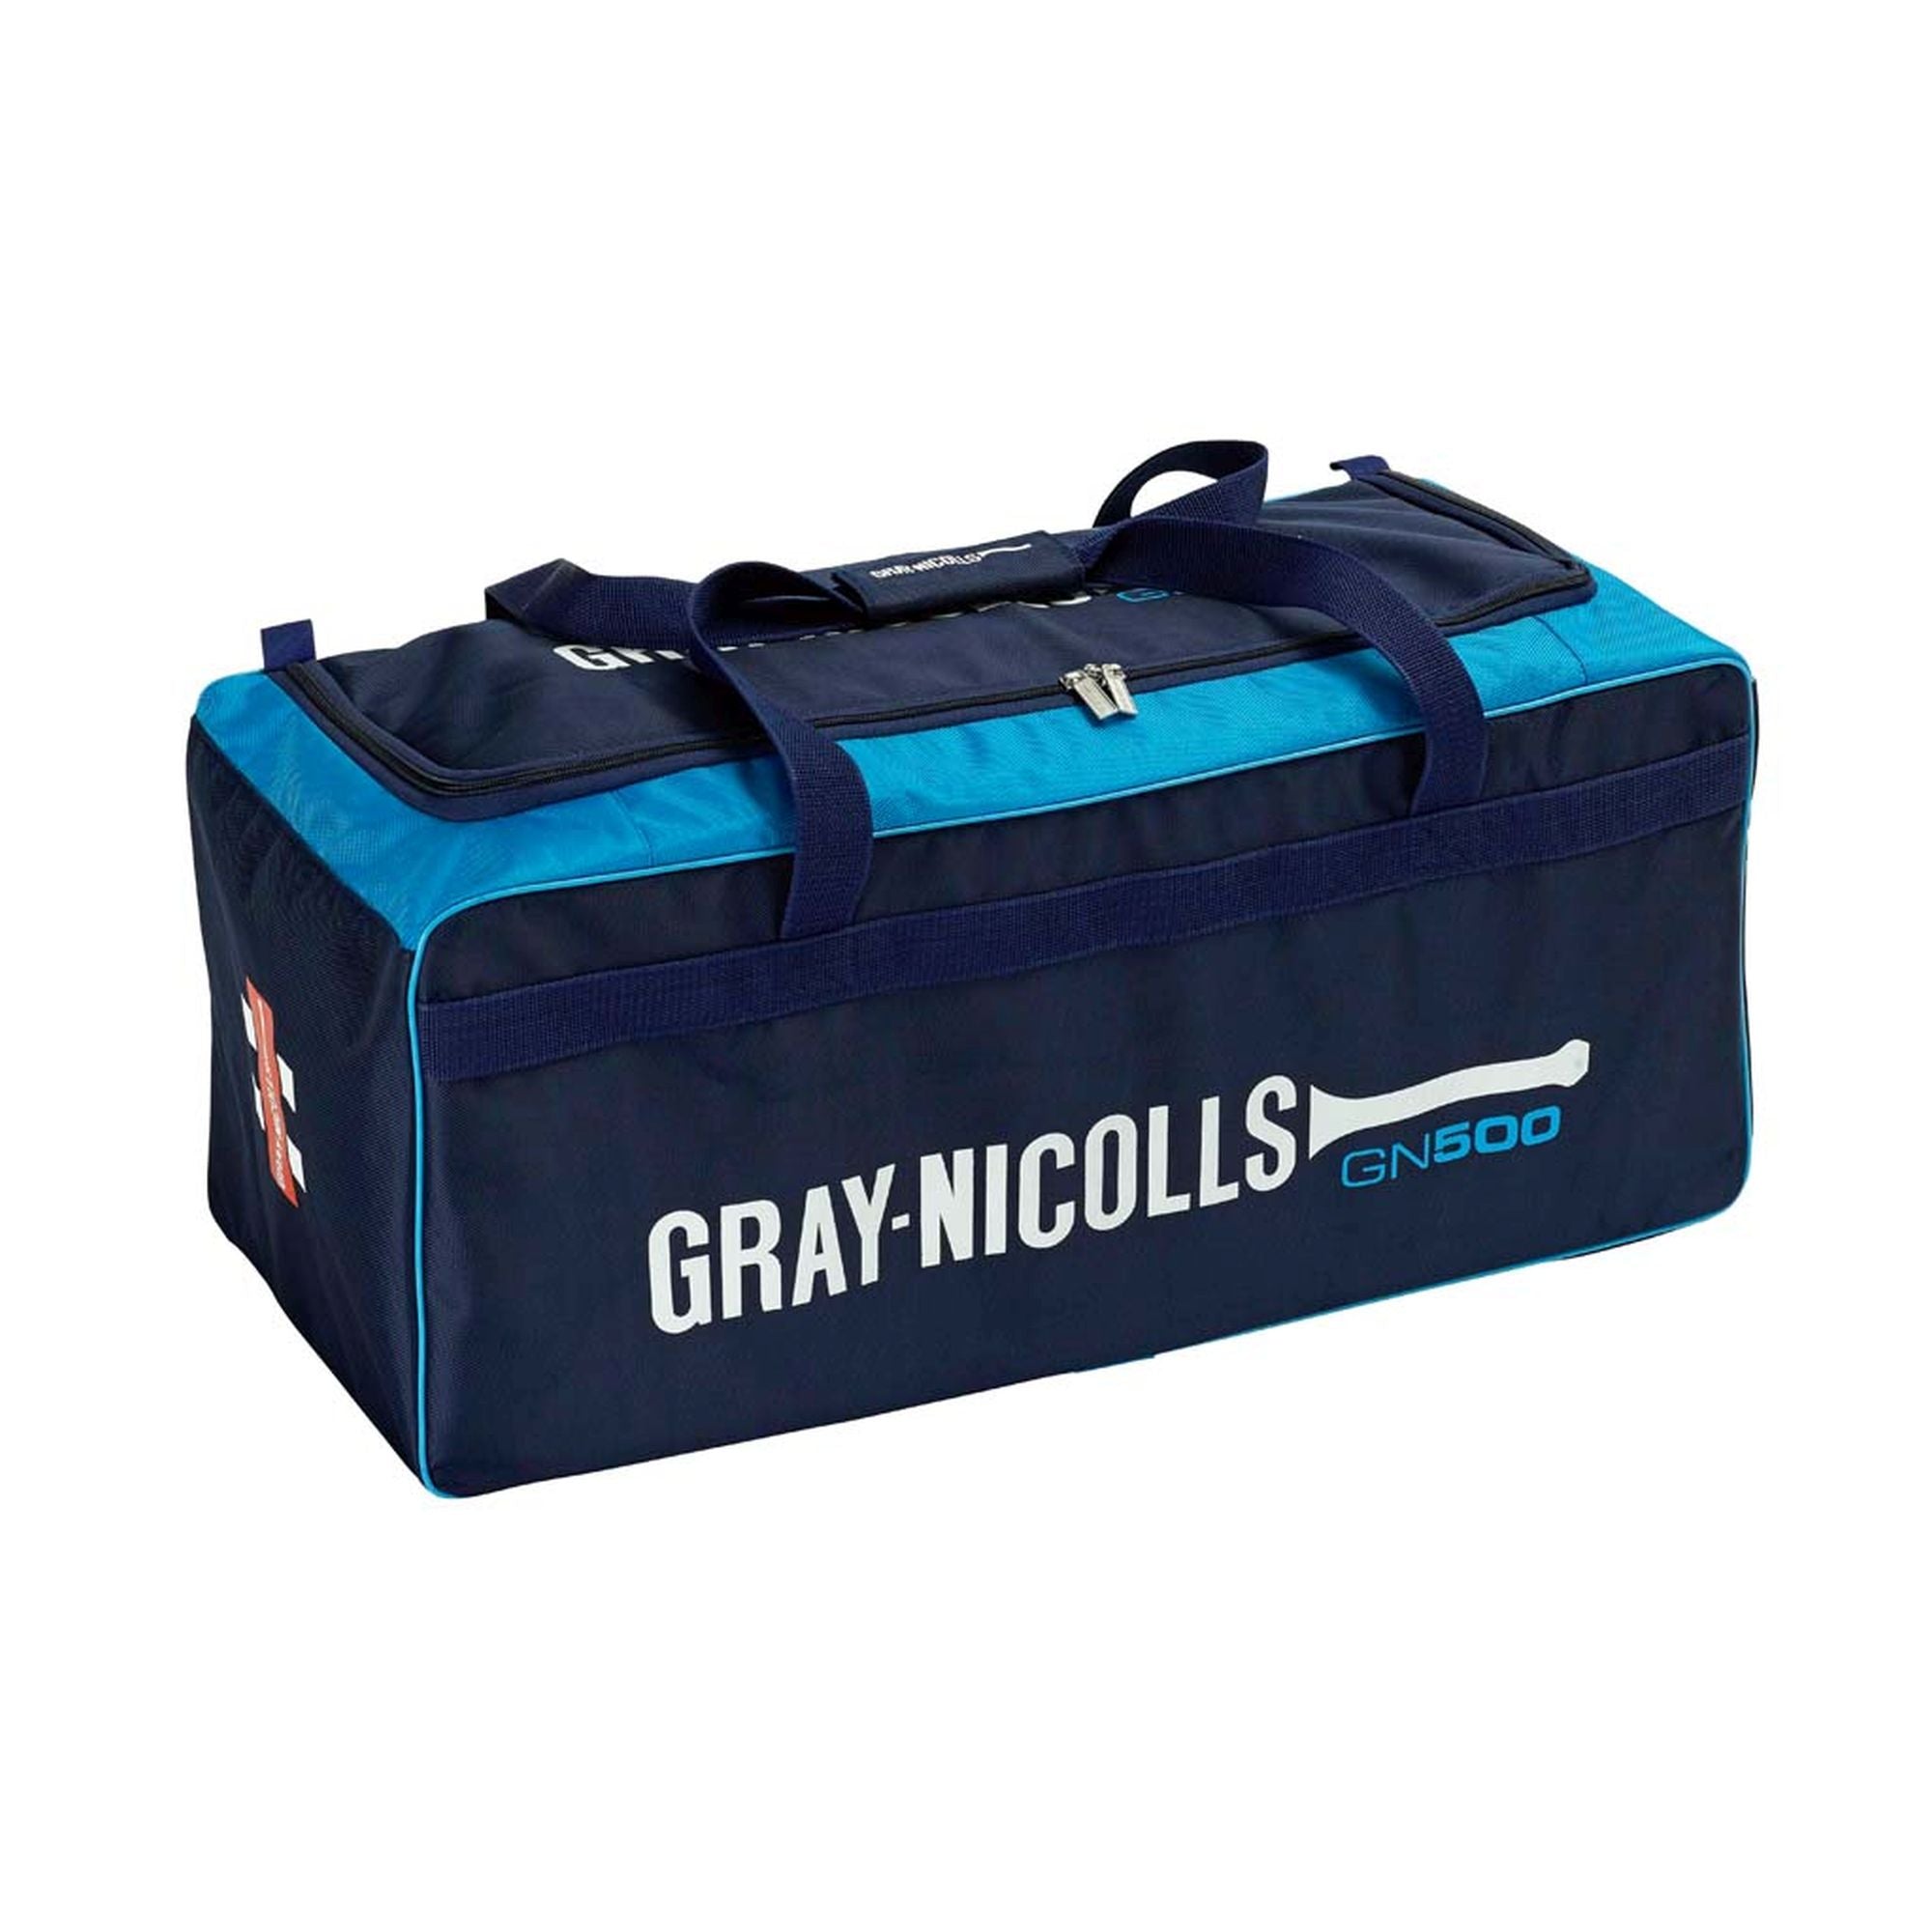 Gray Nicolls 500 Carry Cricket Bag